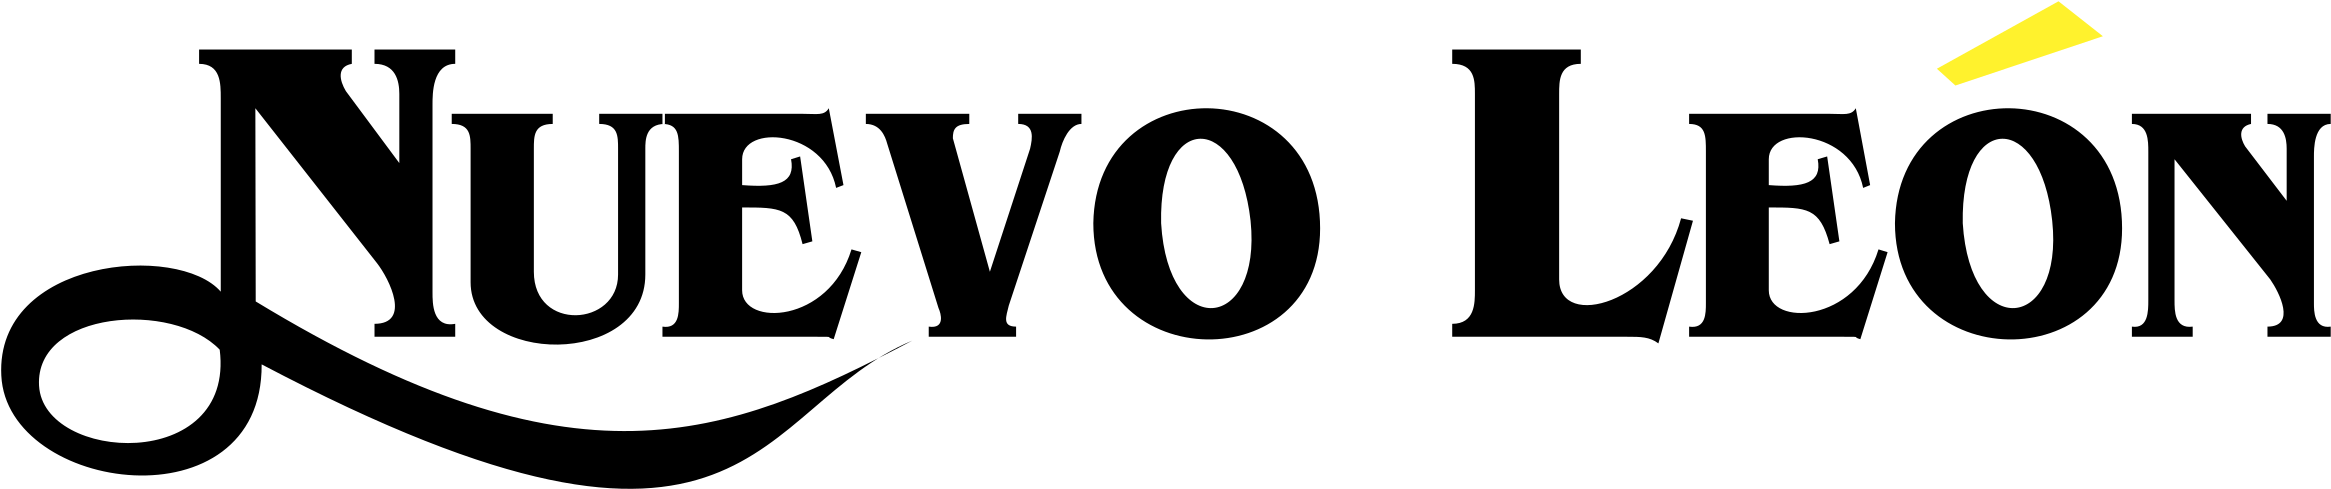 Nuevo Leon Logo Png Transparent Clipart - Large Size Png Image - PikPng